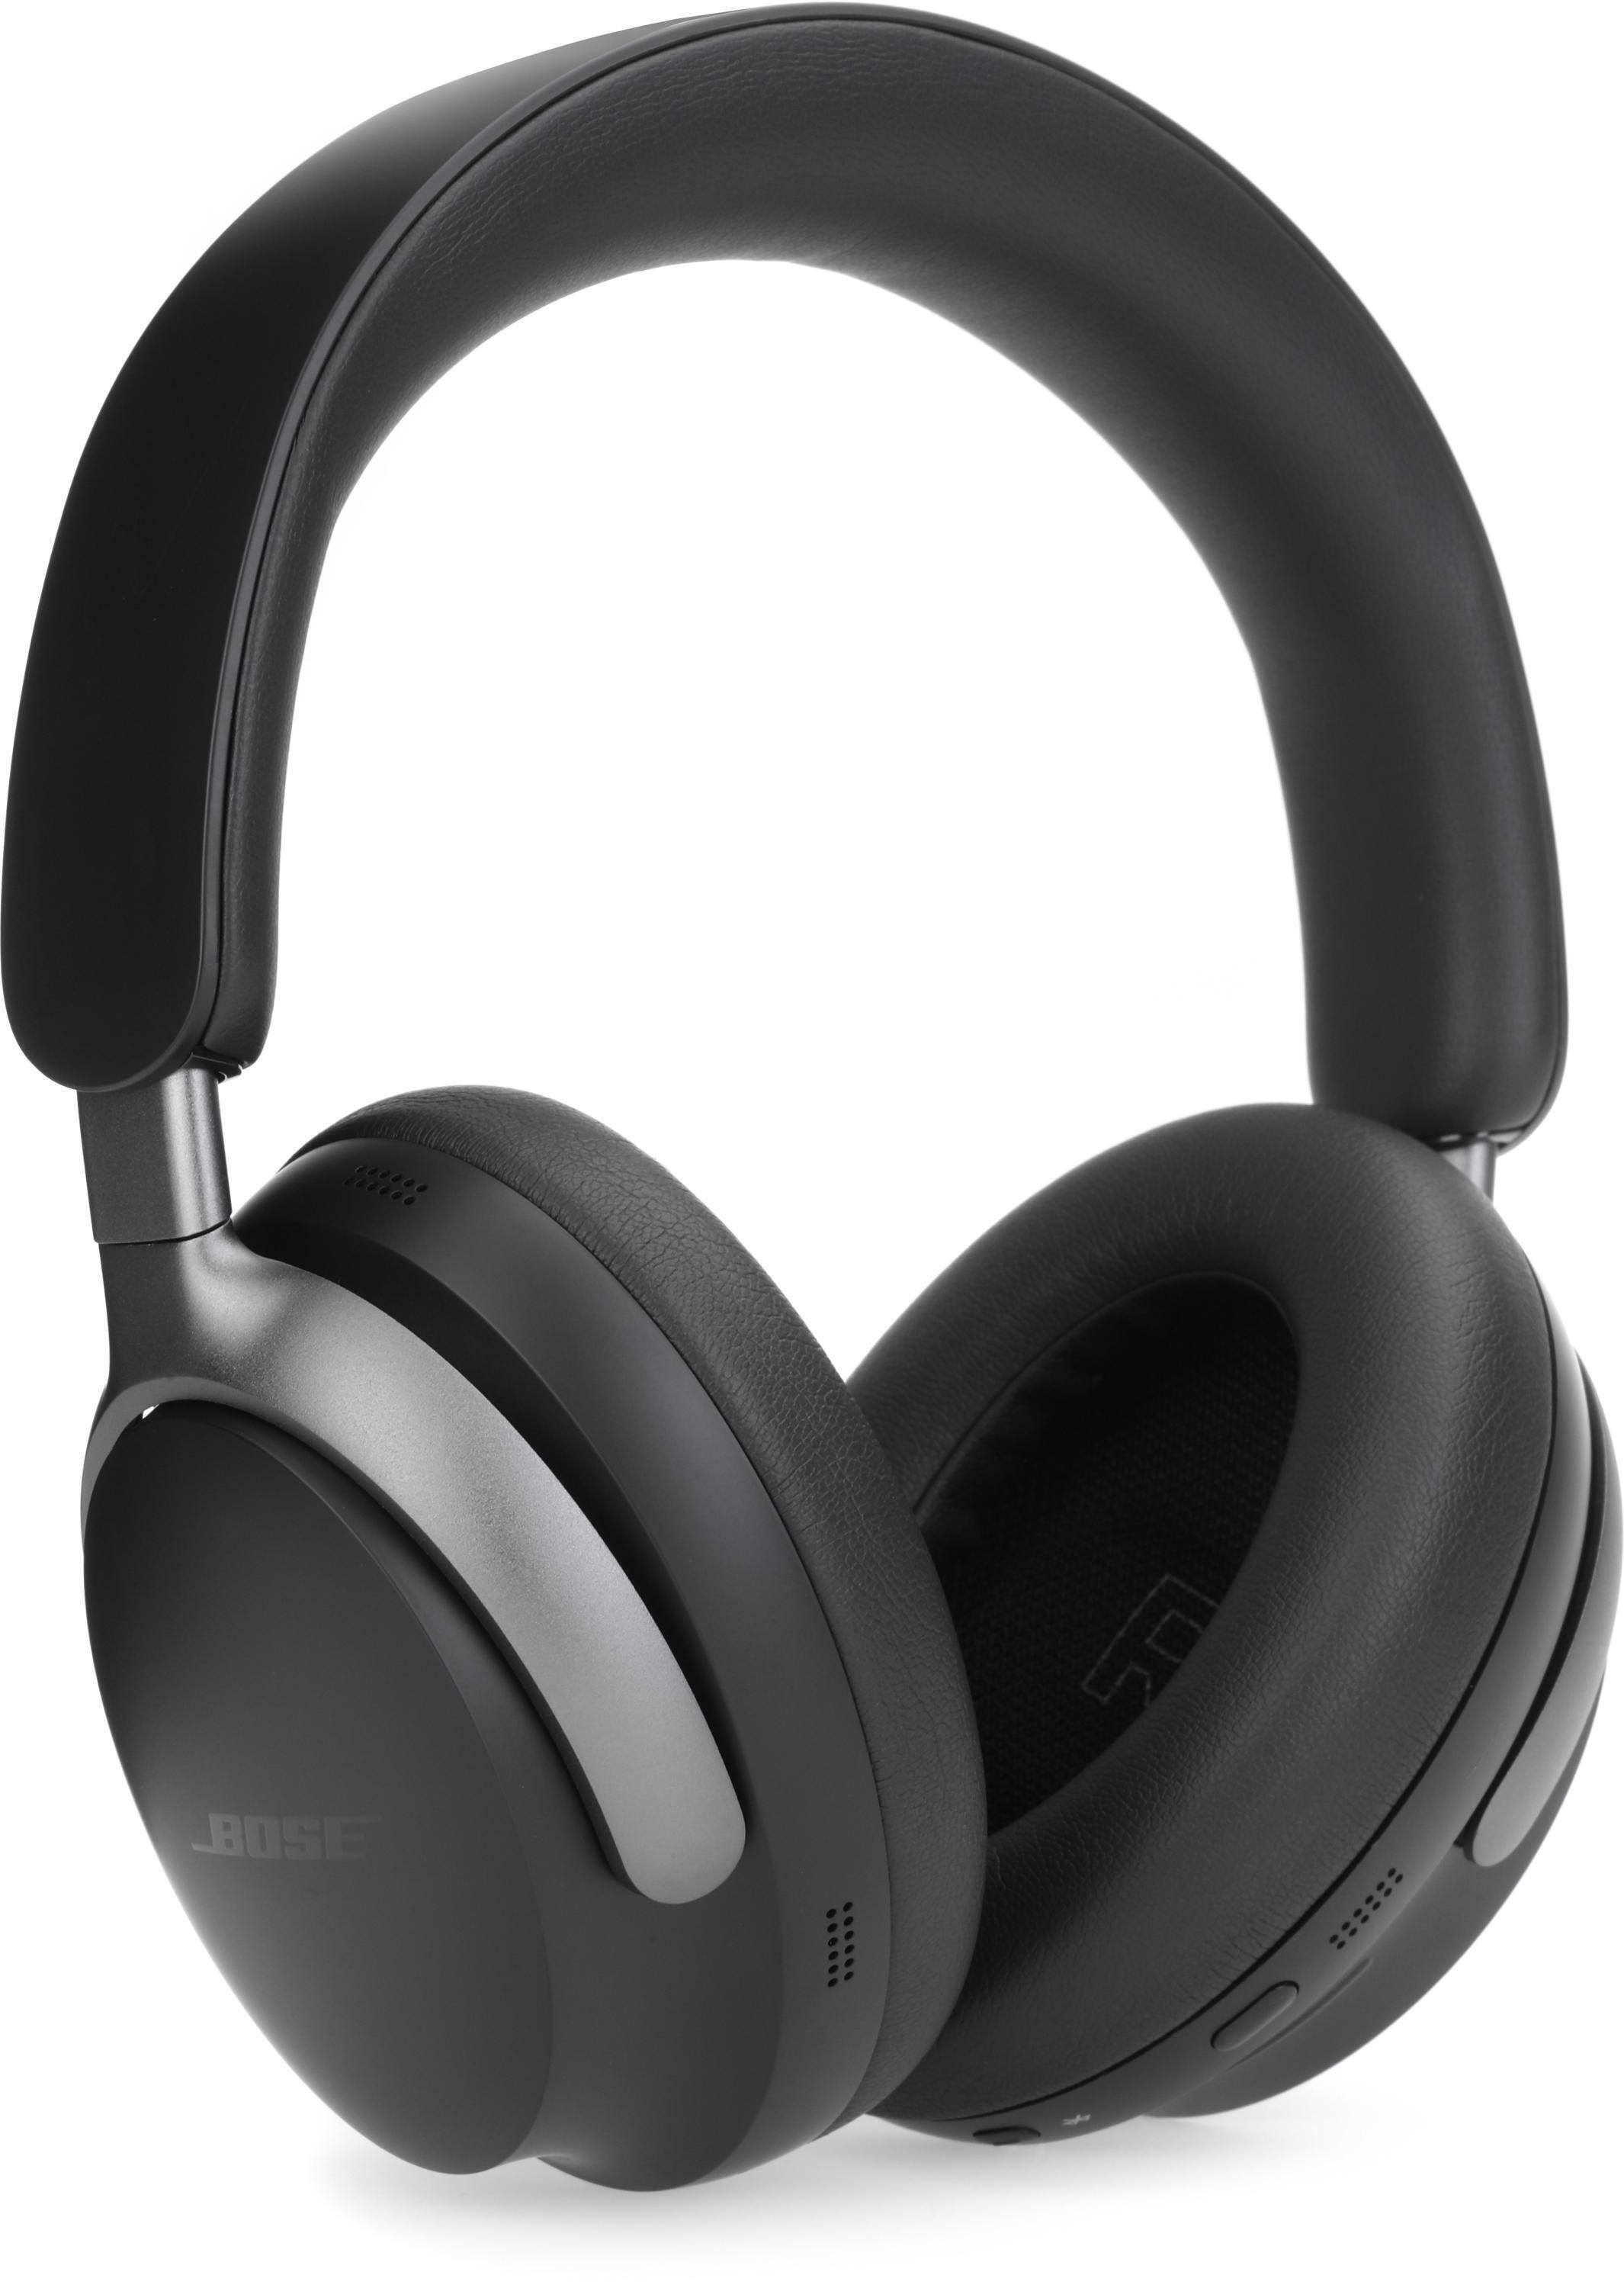 Bose QuietComfort Headphones review: Not ultra, but still great